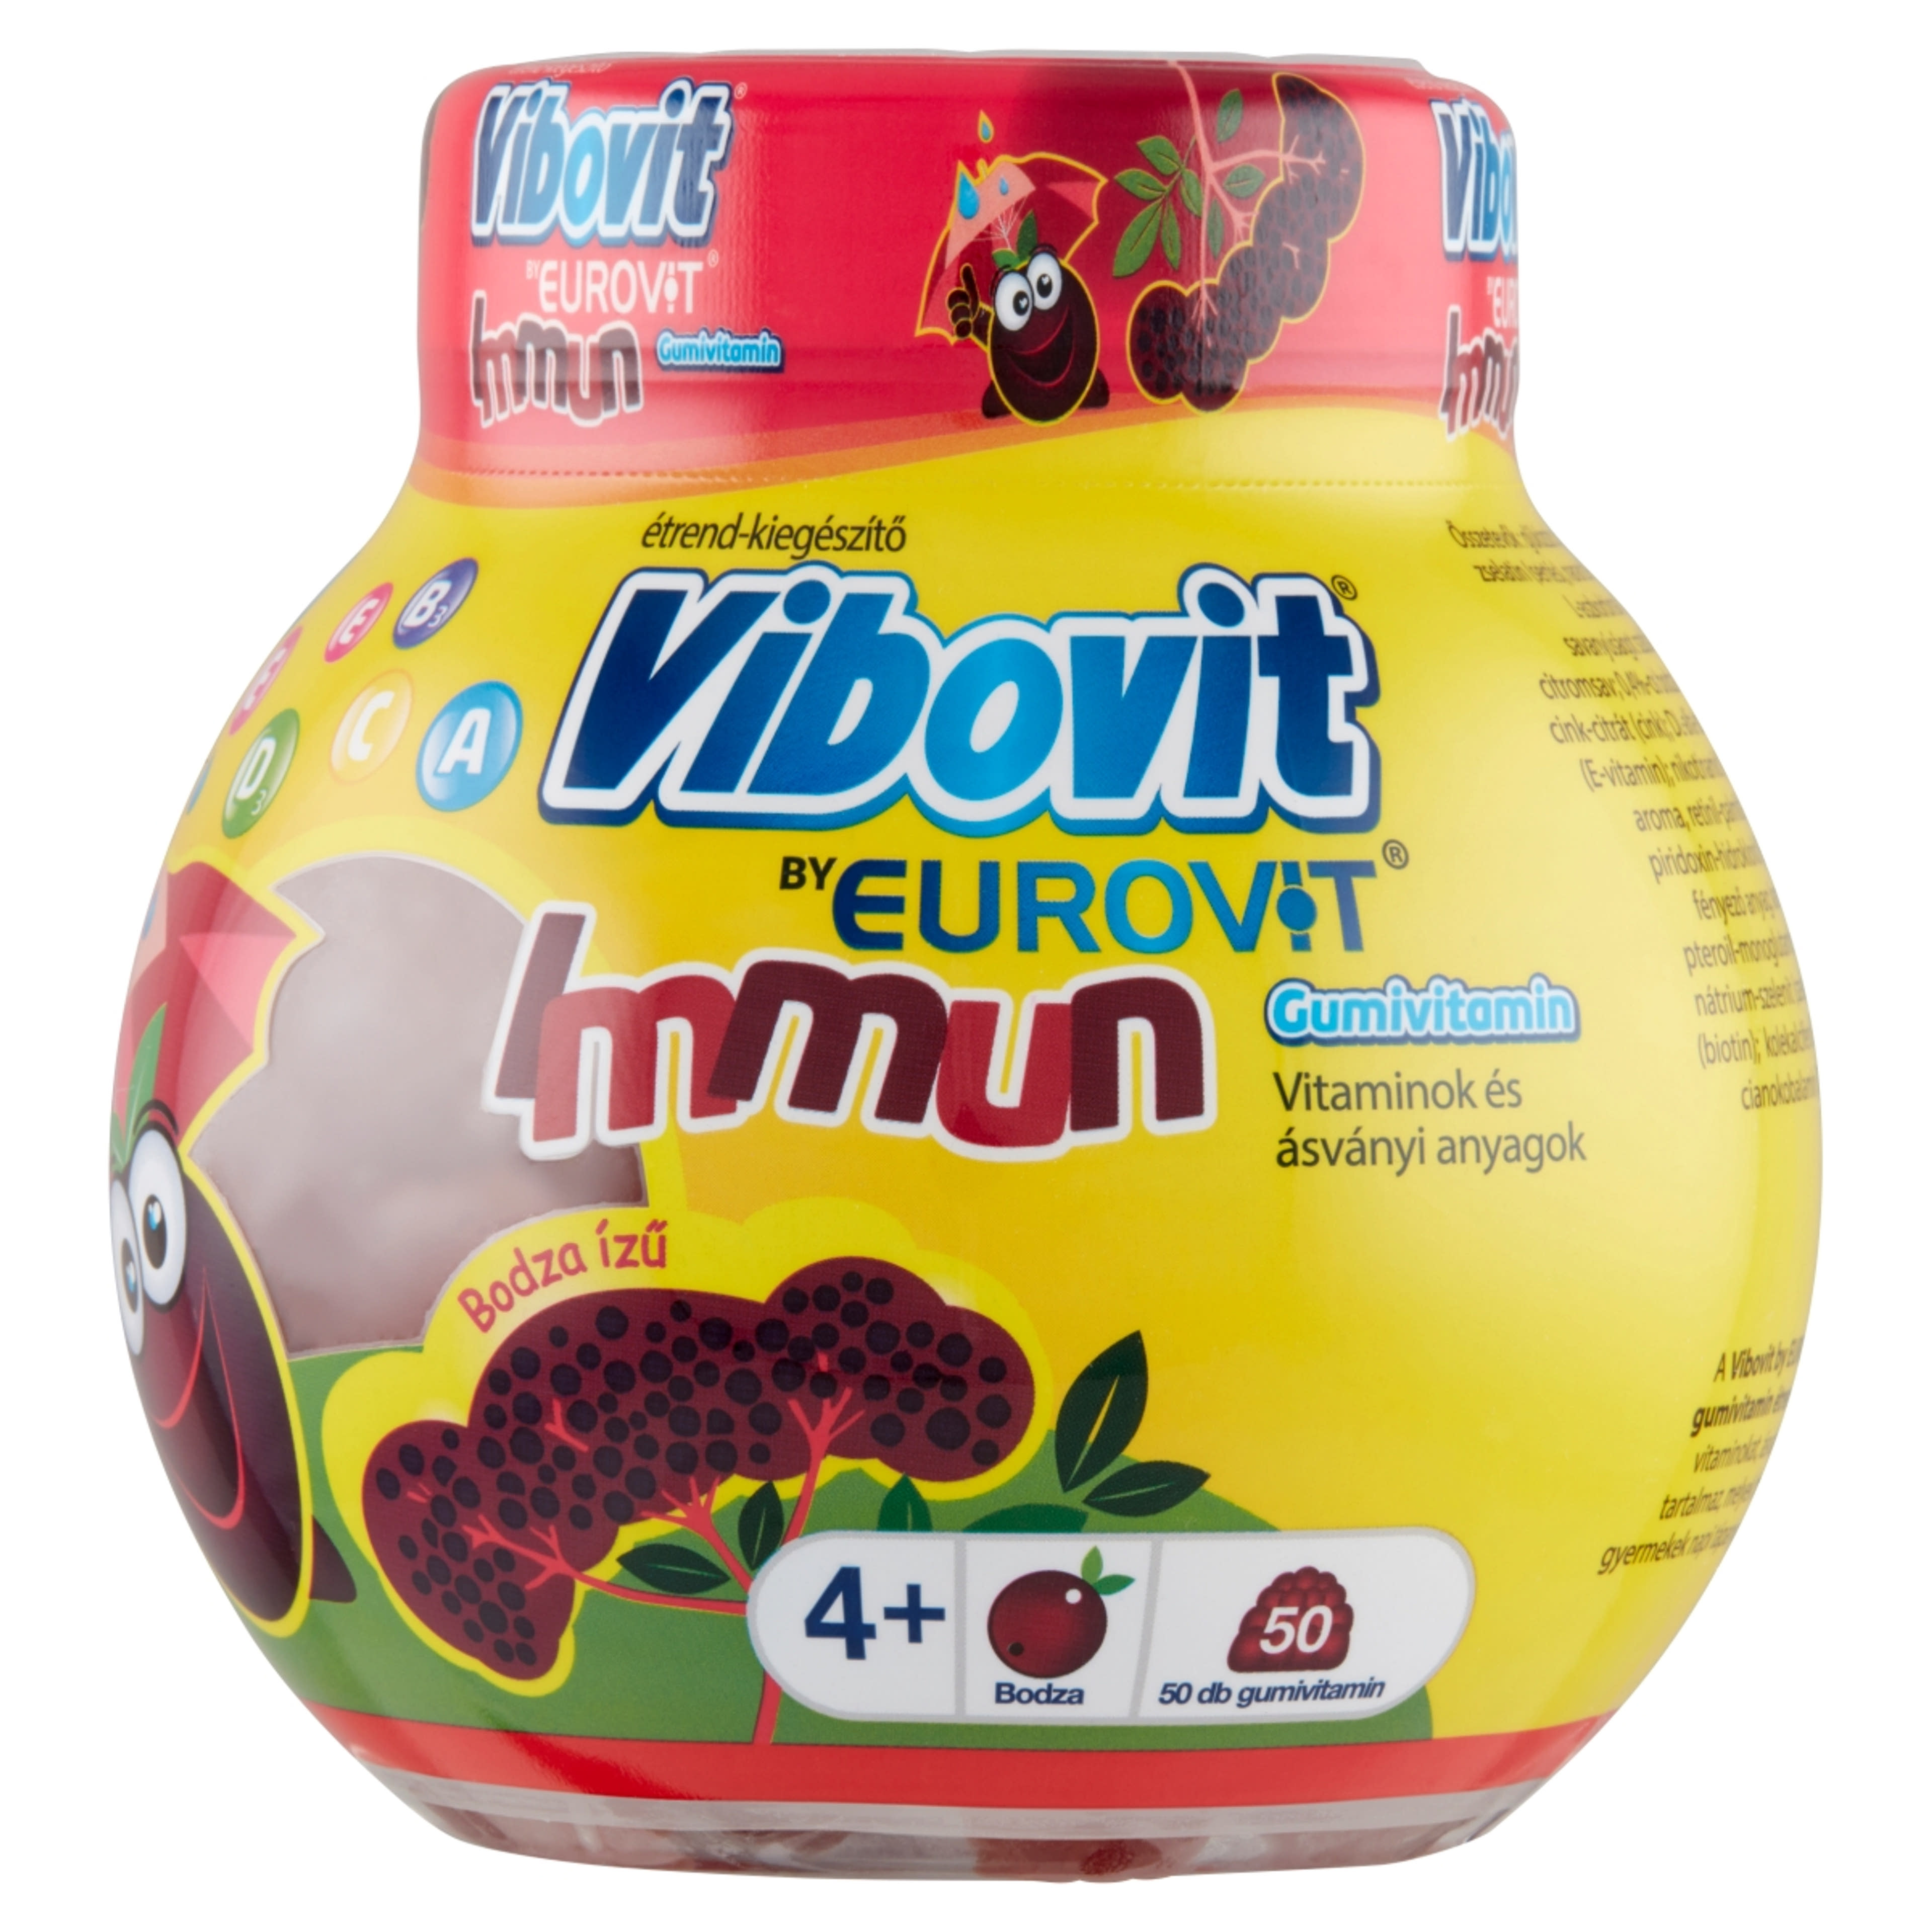 Vibovit by Eurovit immun gumivitamin - 50 db-1